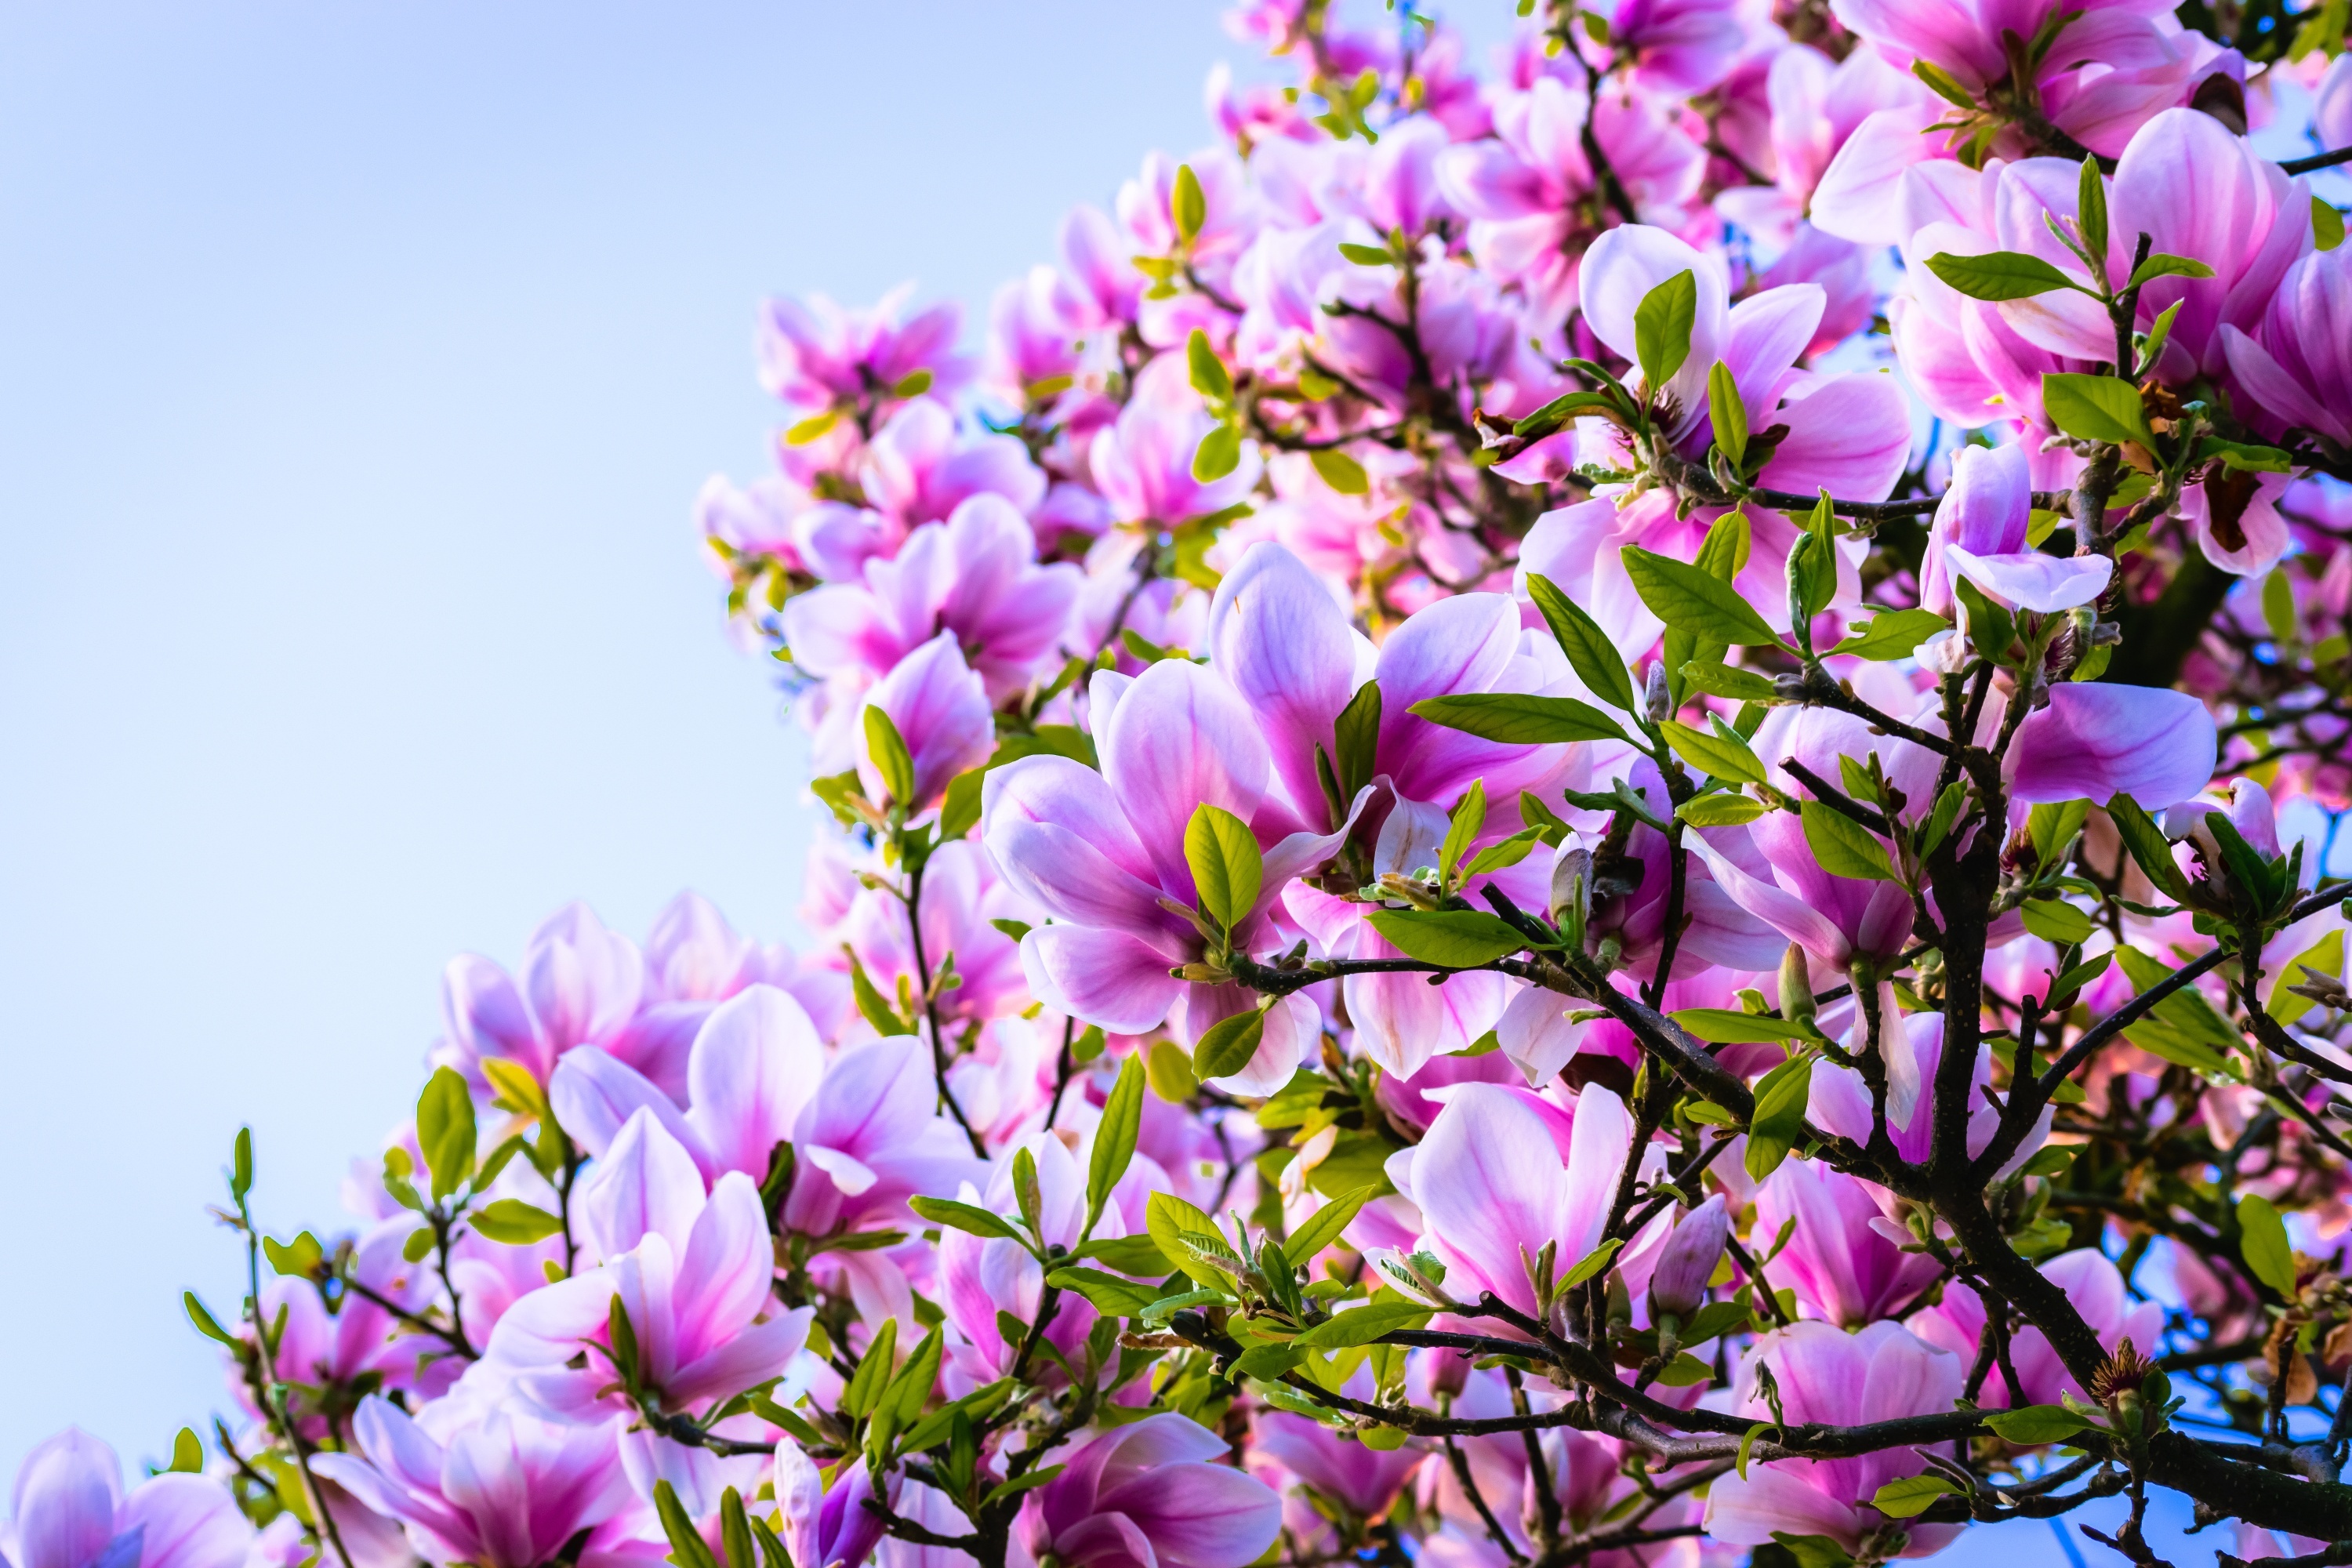 Magnolia beauty, Captivating wallpaper, HD background, Nature photography, 3000x2000 HD Desktop